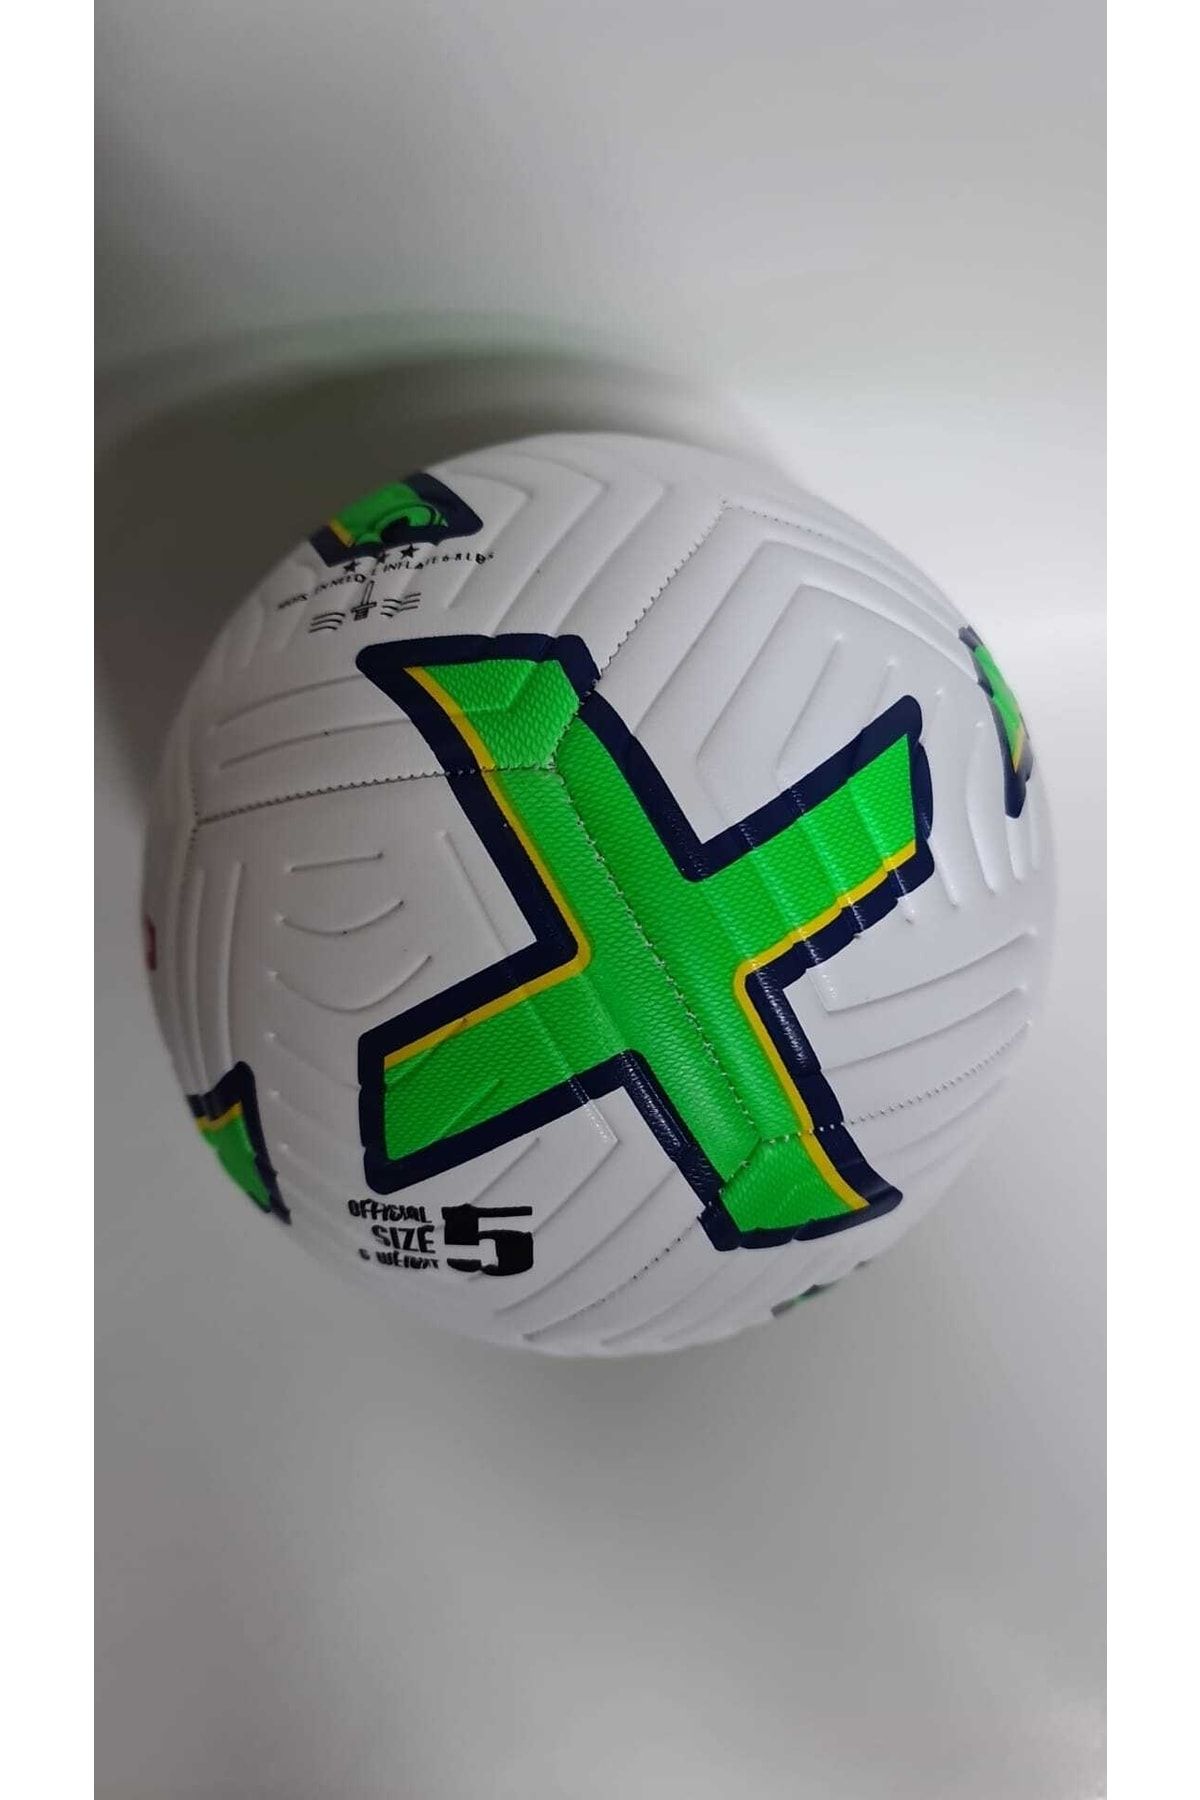 Avessa Bsf-022 4 Astar 400 Gr No:5 Strike Soccer Ball Futbol Maç Topu Orta Sertlikte Tüm Zeminlere Uygun